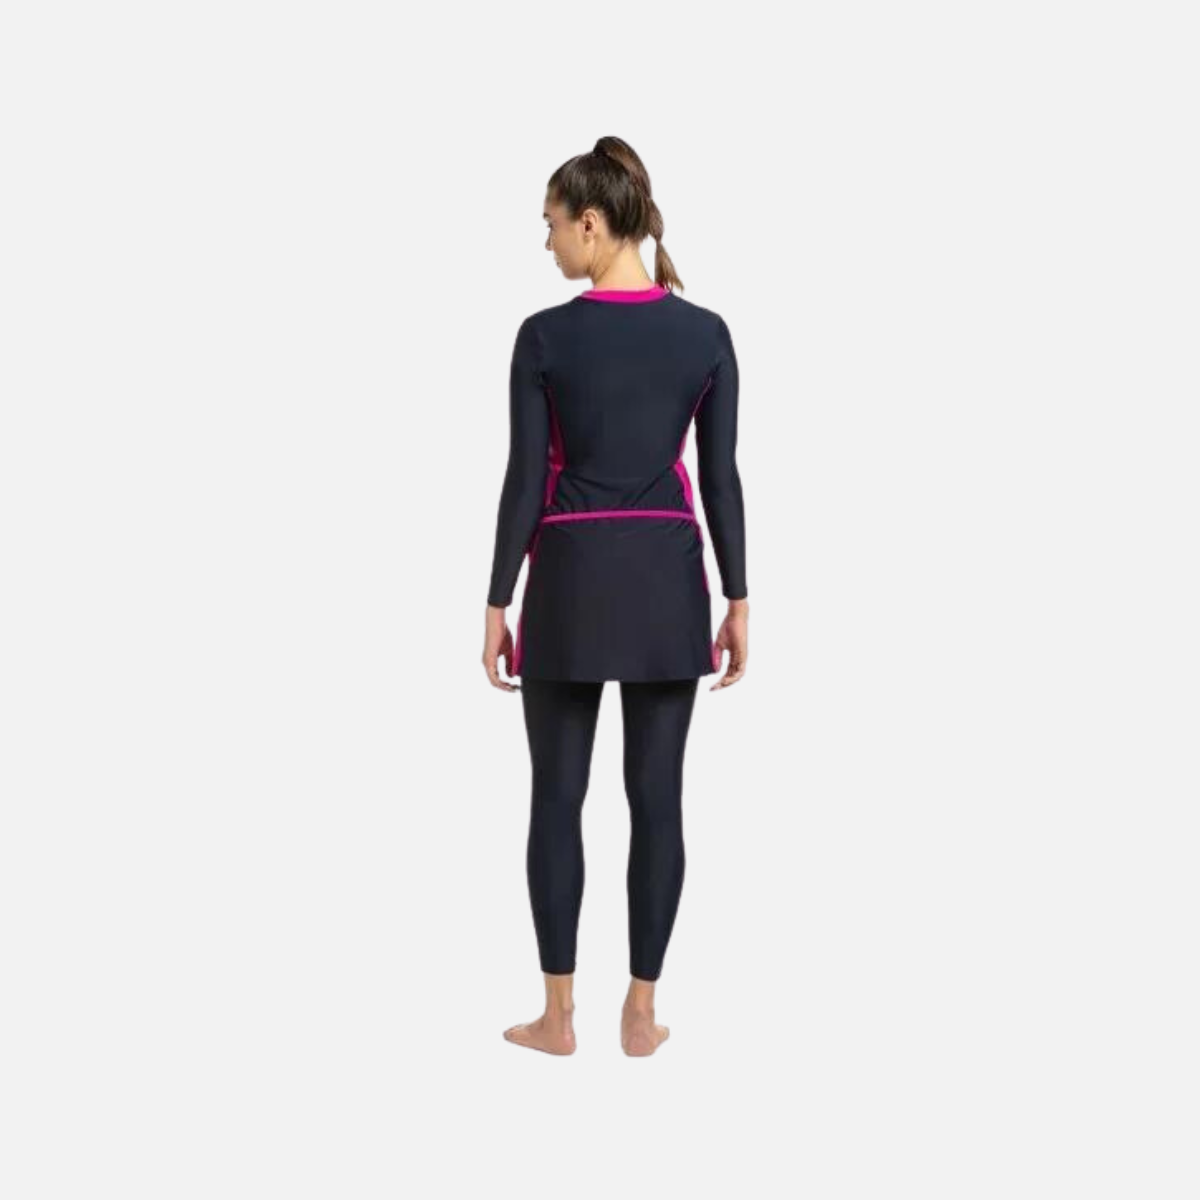 Speedo Adult Female 2Pc Full Body Suit - True Navy/Electric Pink